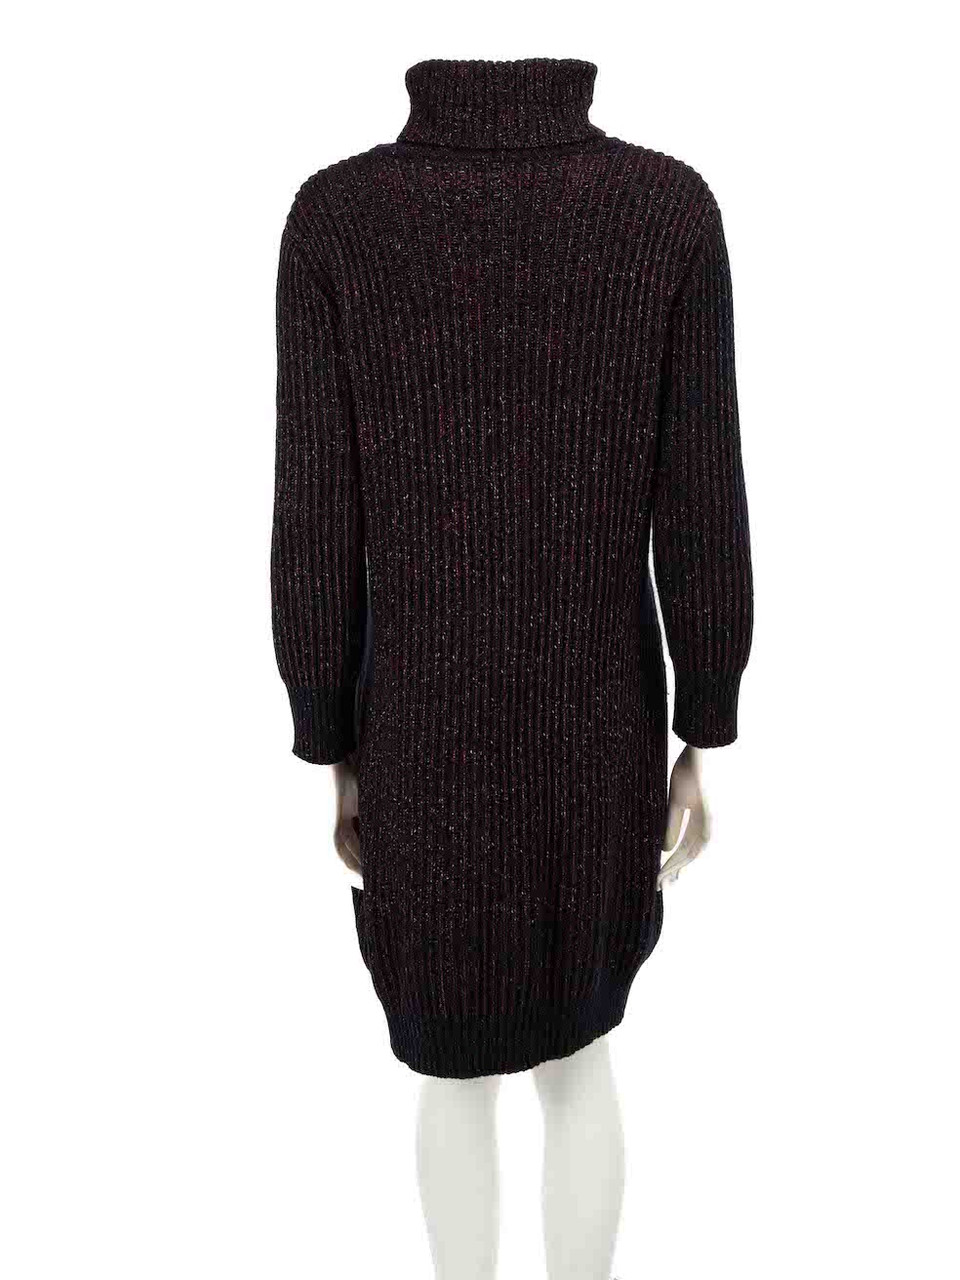 Chanel Navy Cashmere Knit Sweater Dress